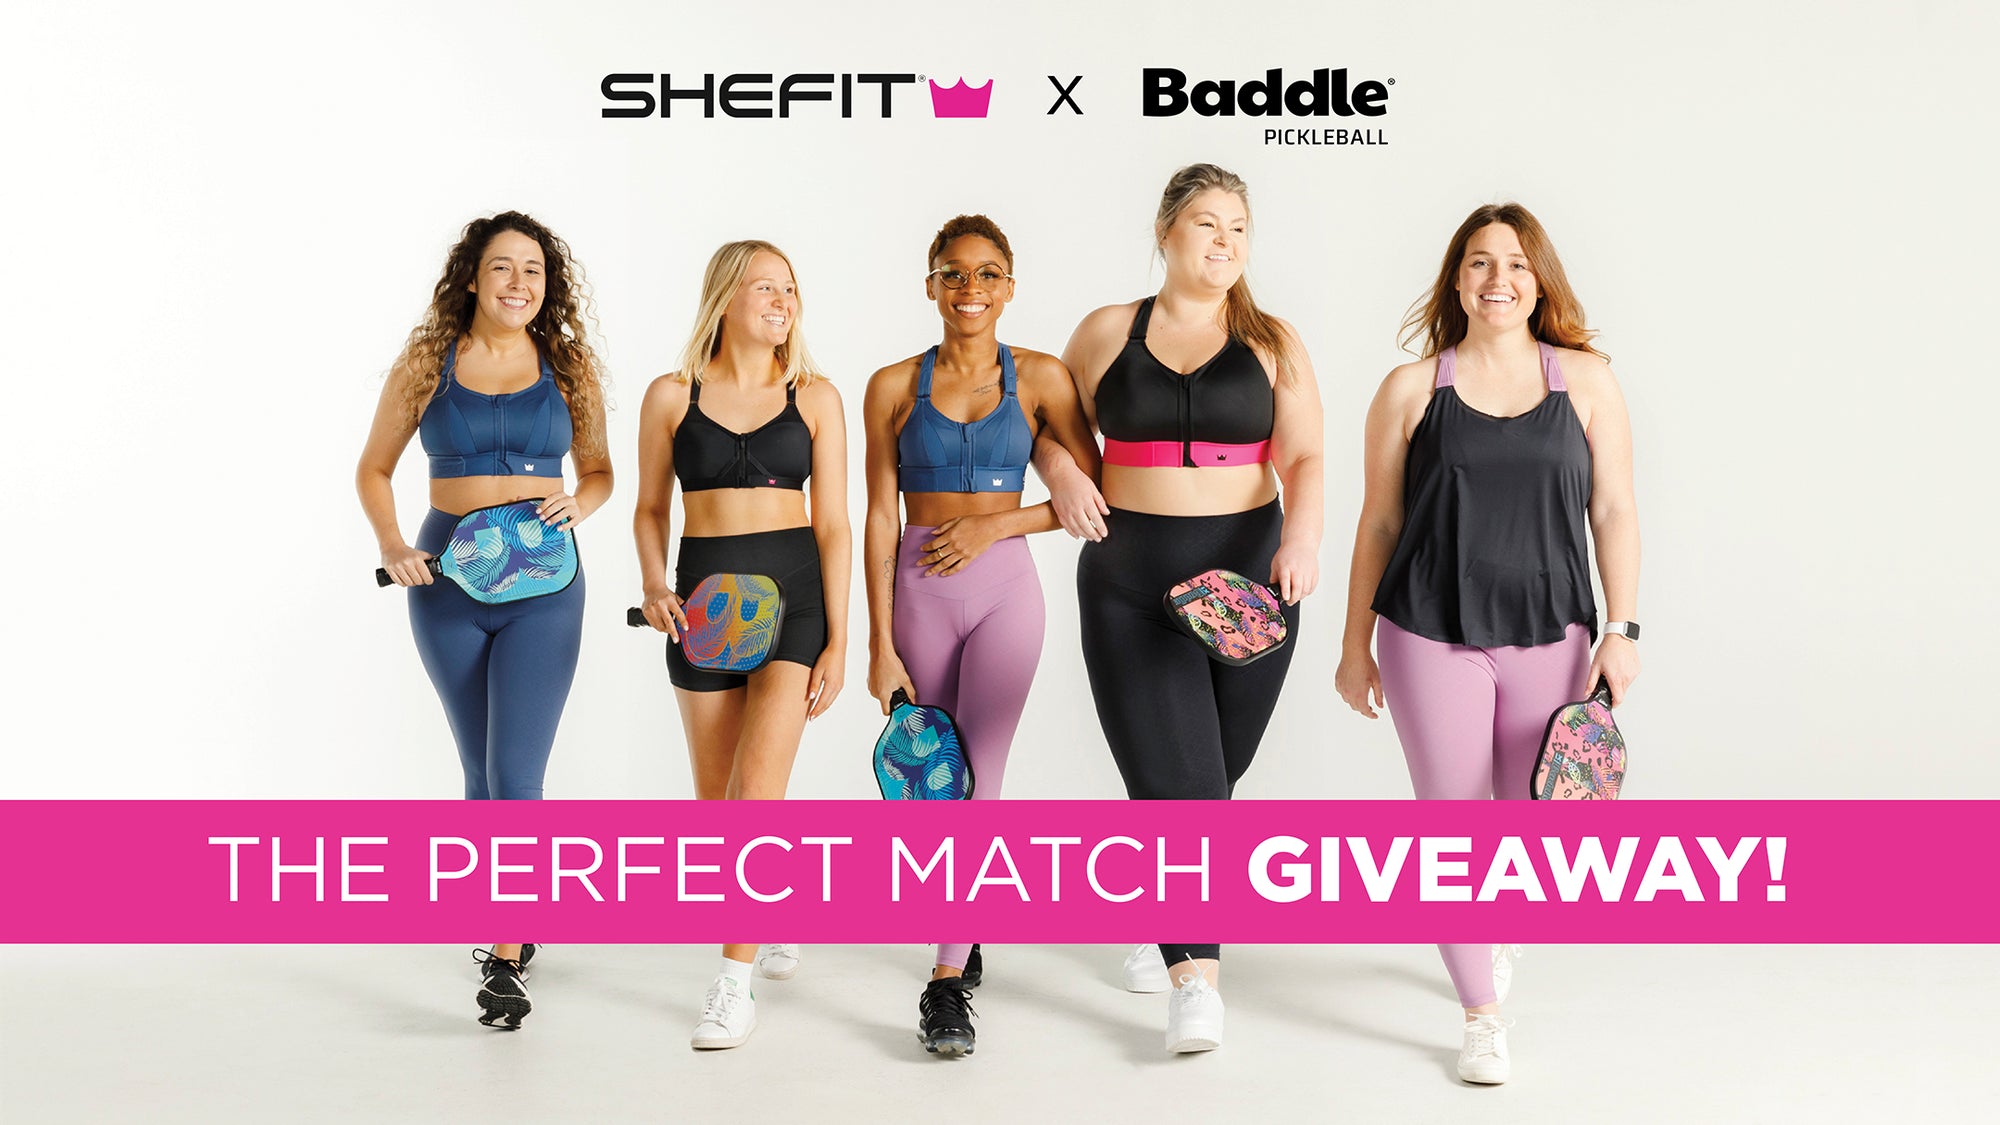 The Perfect Match Giveaway” SHEFIT x Baddle